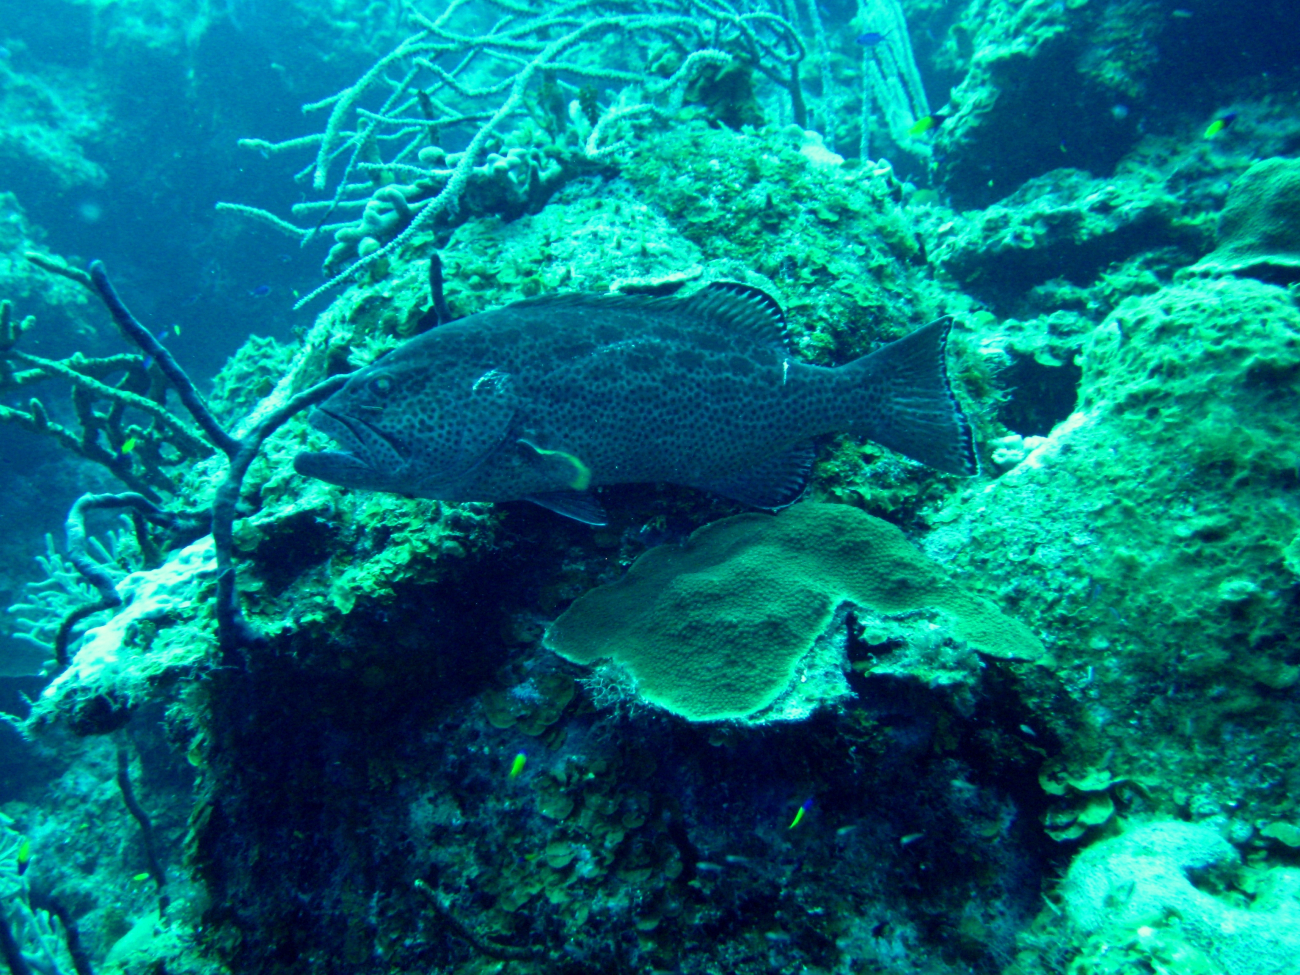 Yellowfin grouper (Mycteroperca venenosa)